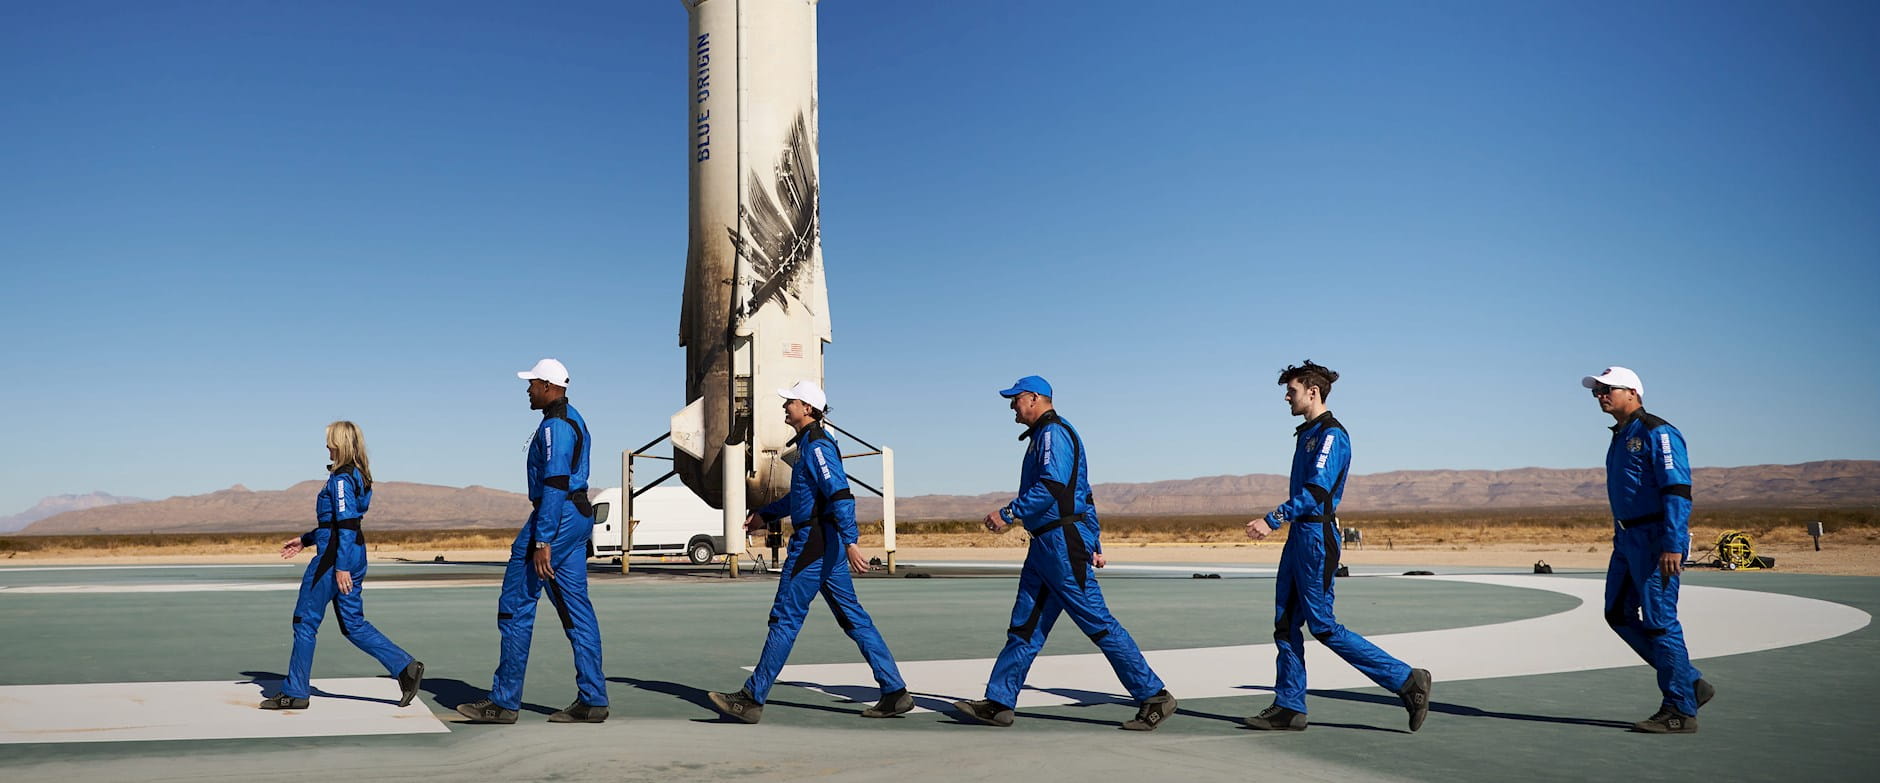 Members of Blue Origin's space exploration program walking on the tarmac